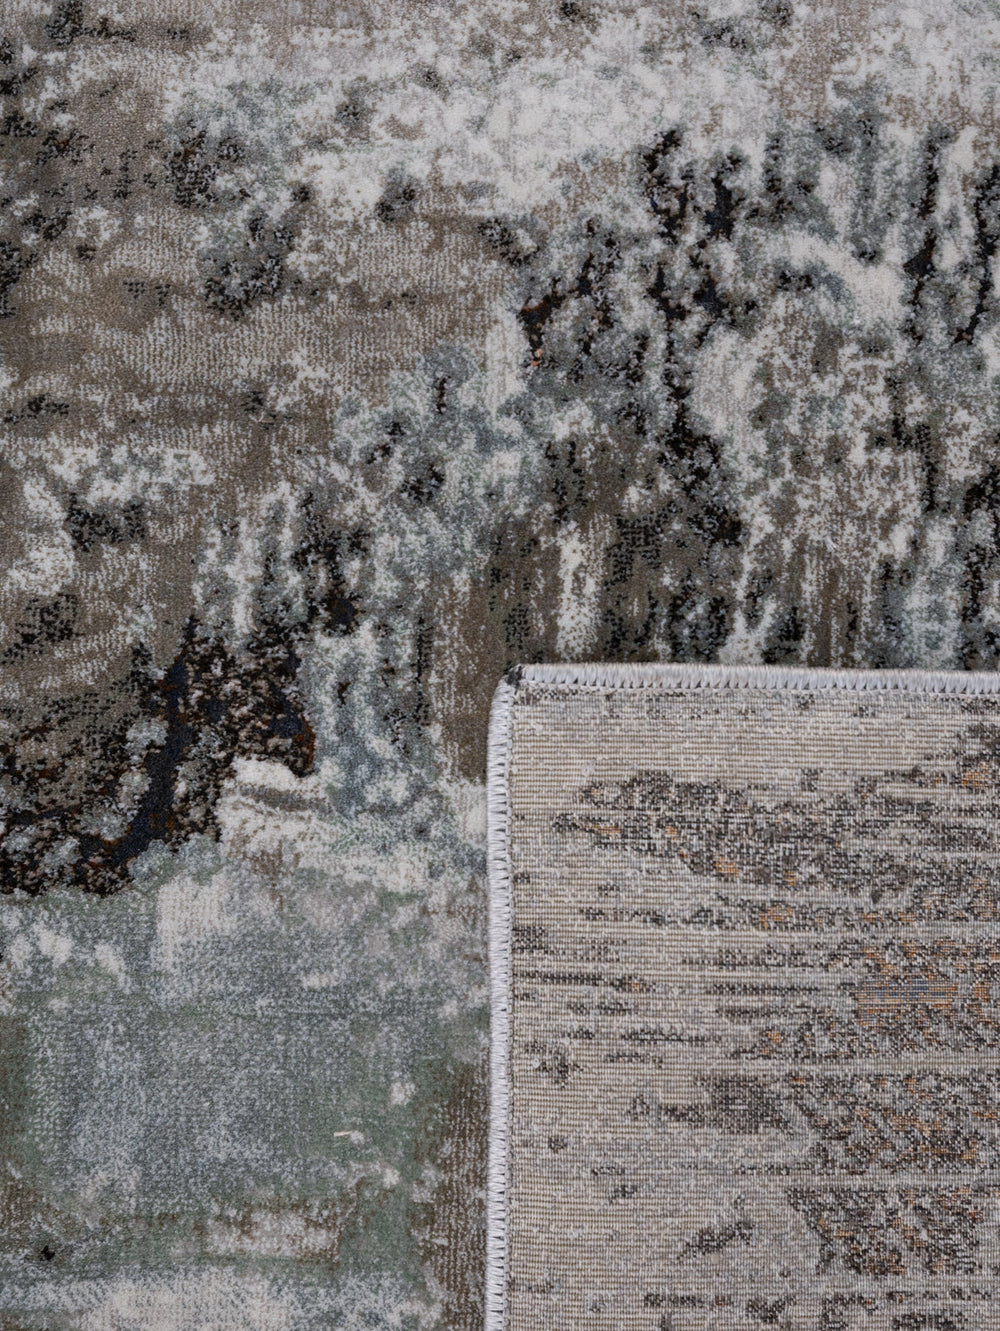 Expressive Rug in Overcast - rug- Hertex Haus Online - Abstract